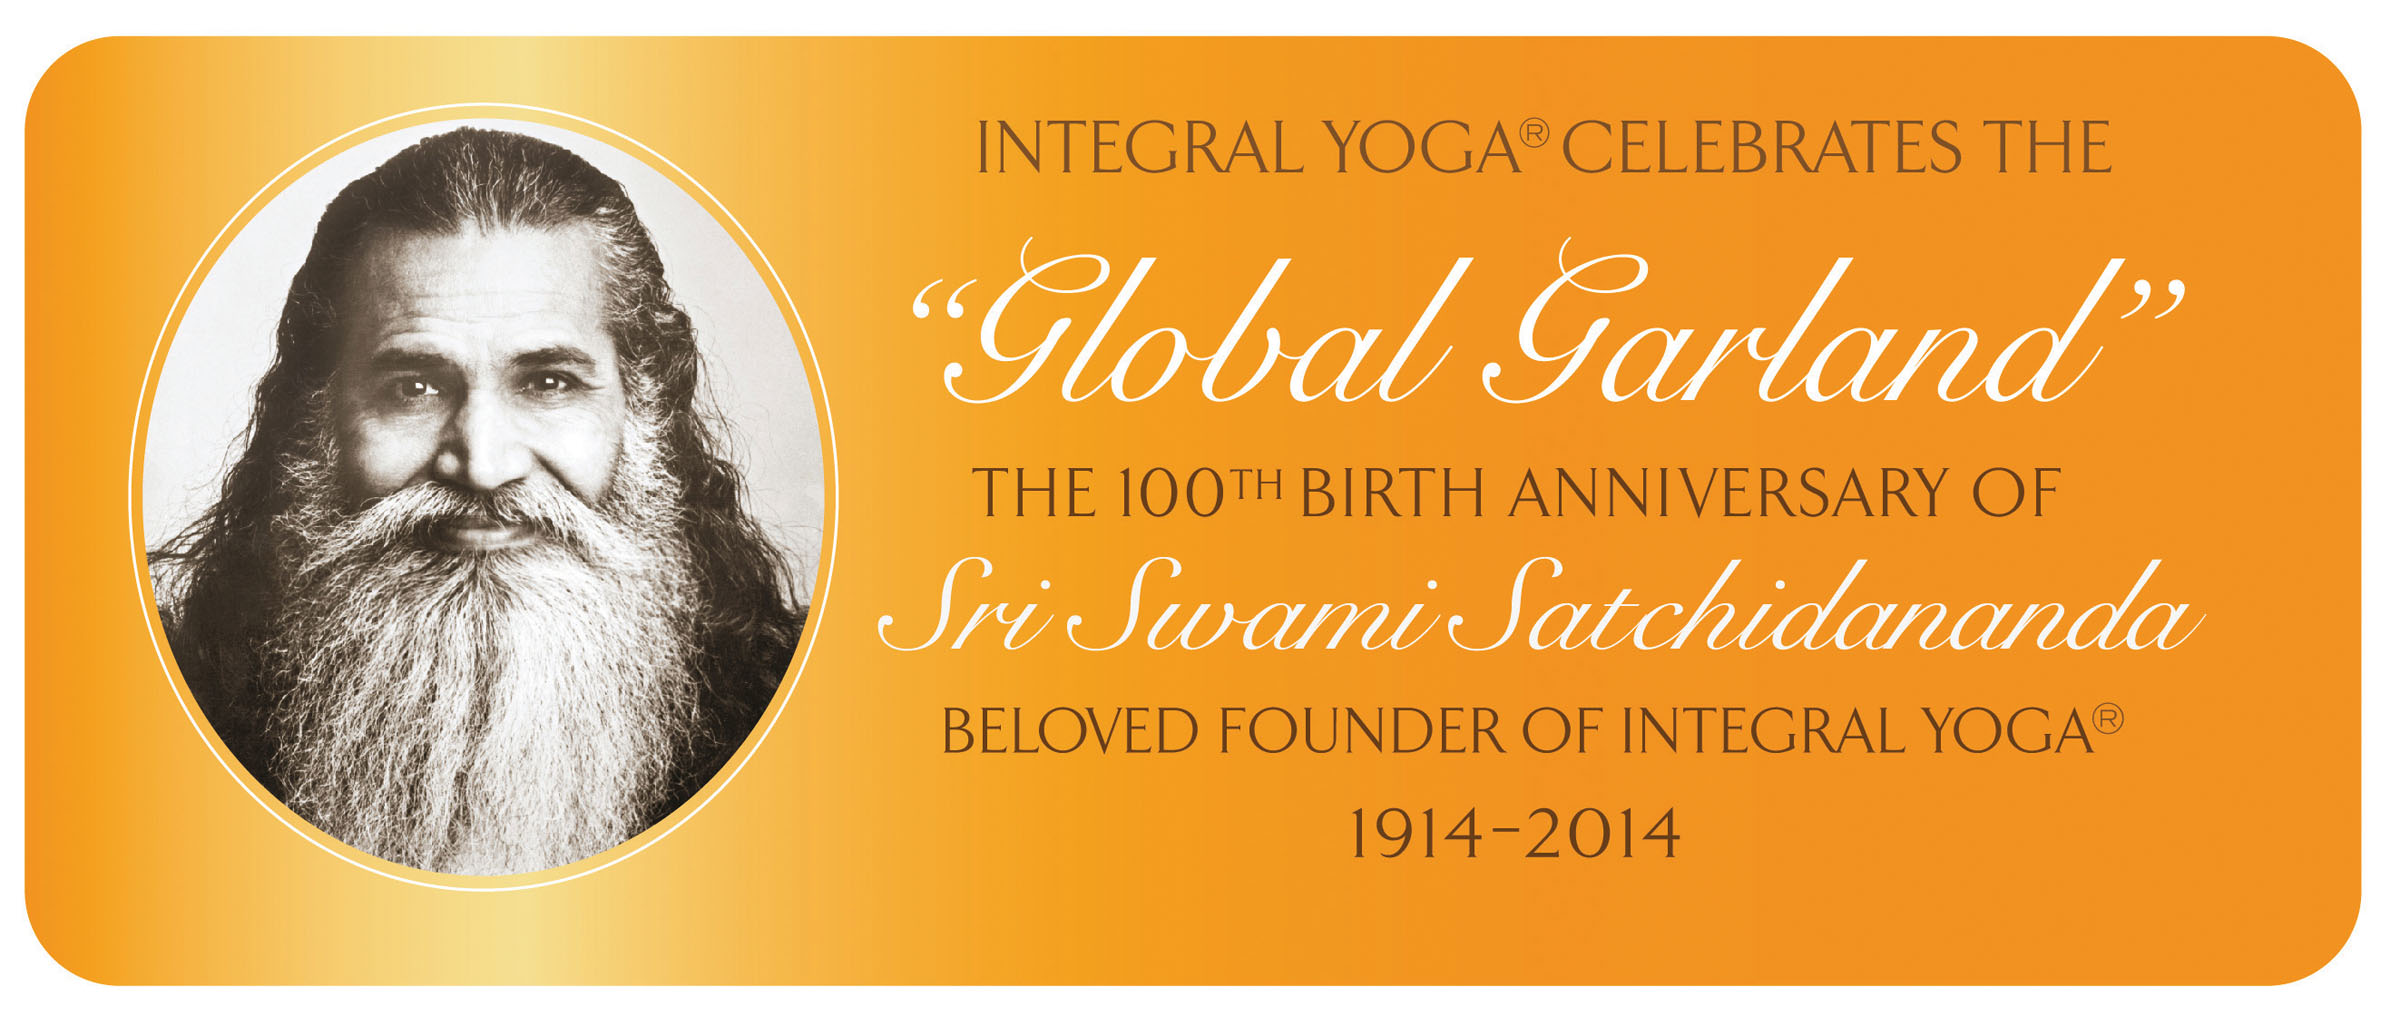 Integral Yoga Celebrates the Global Garland